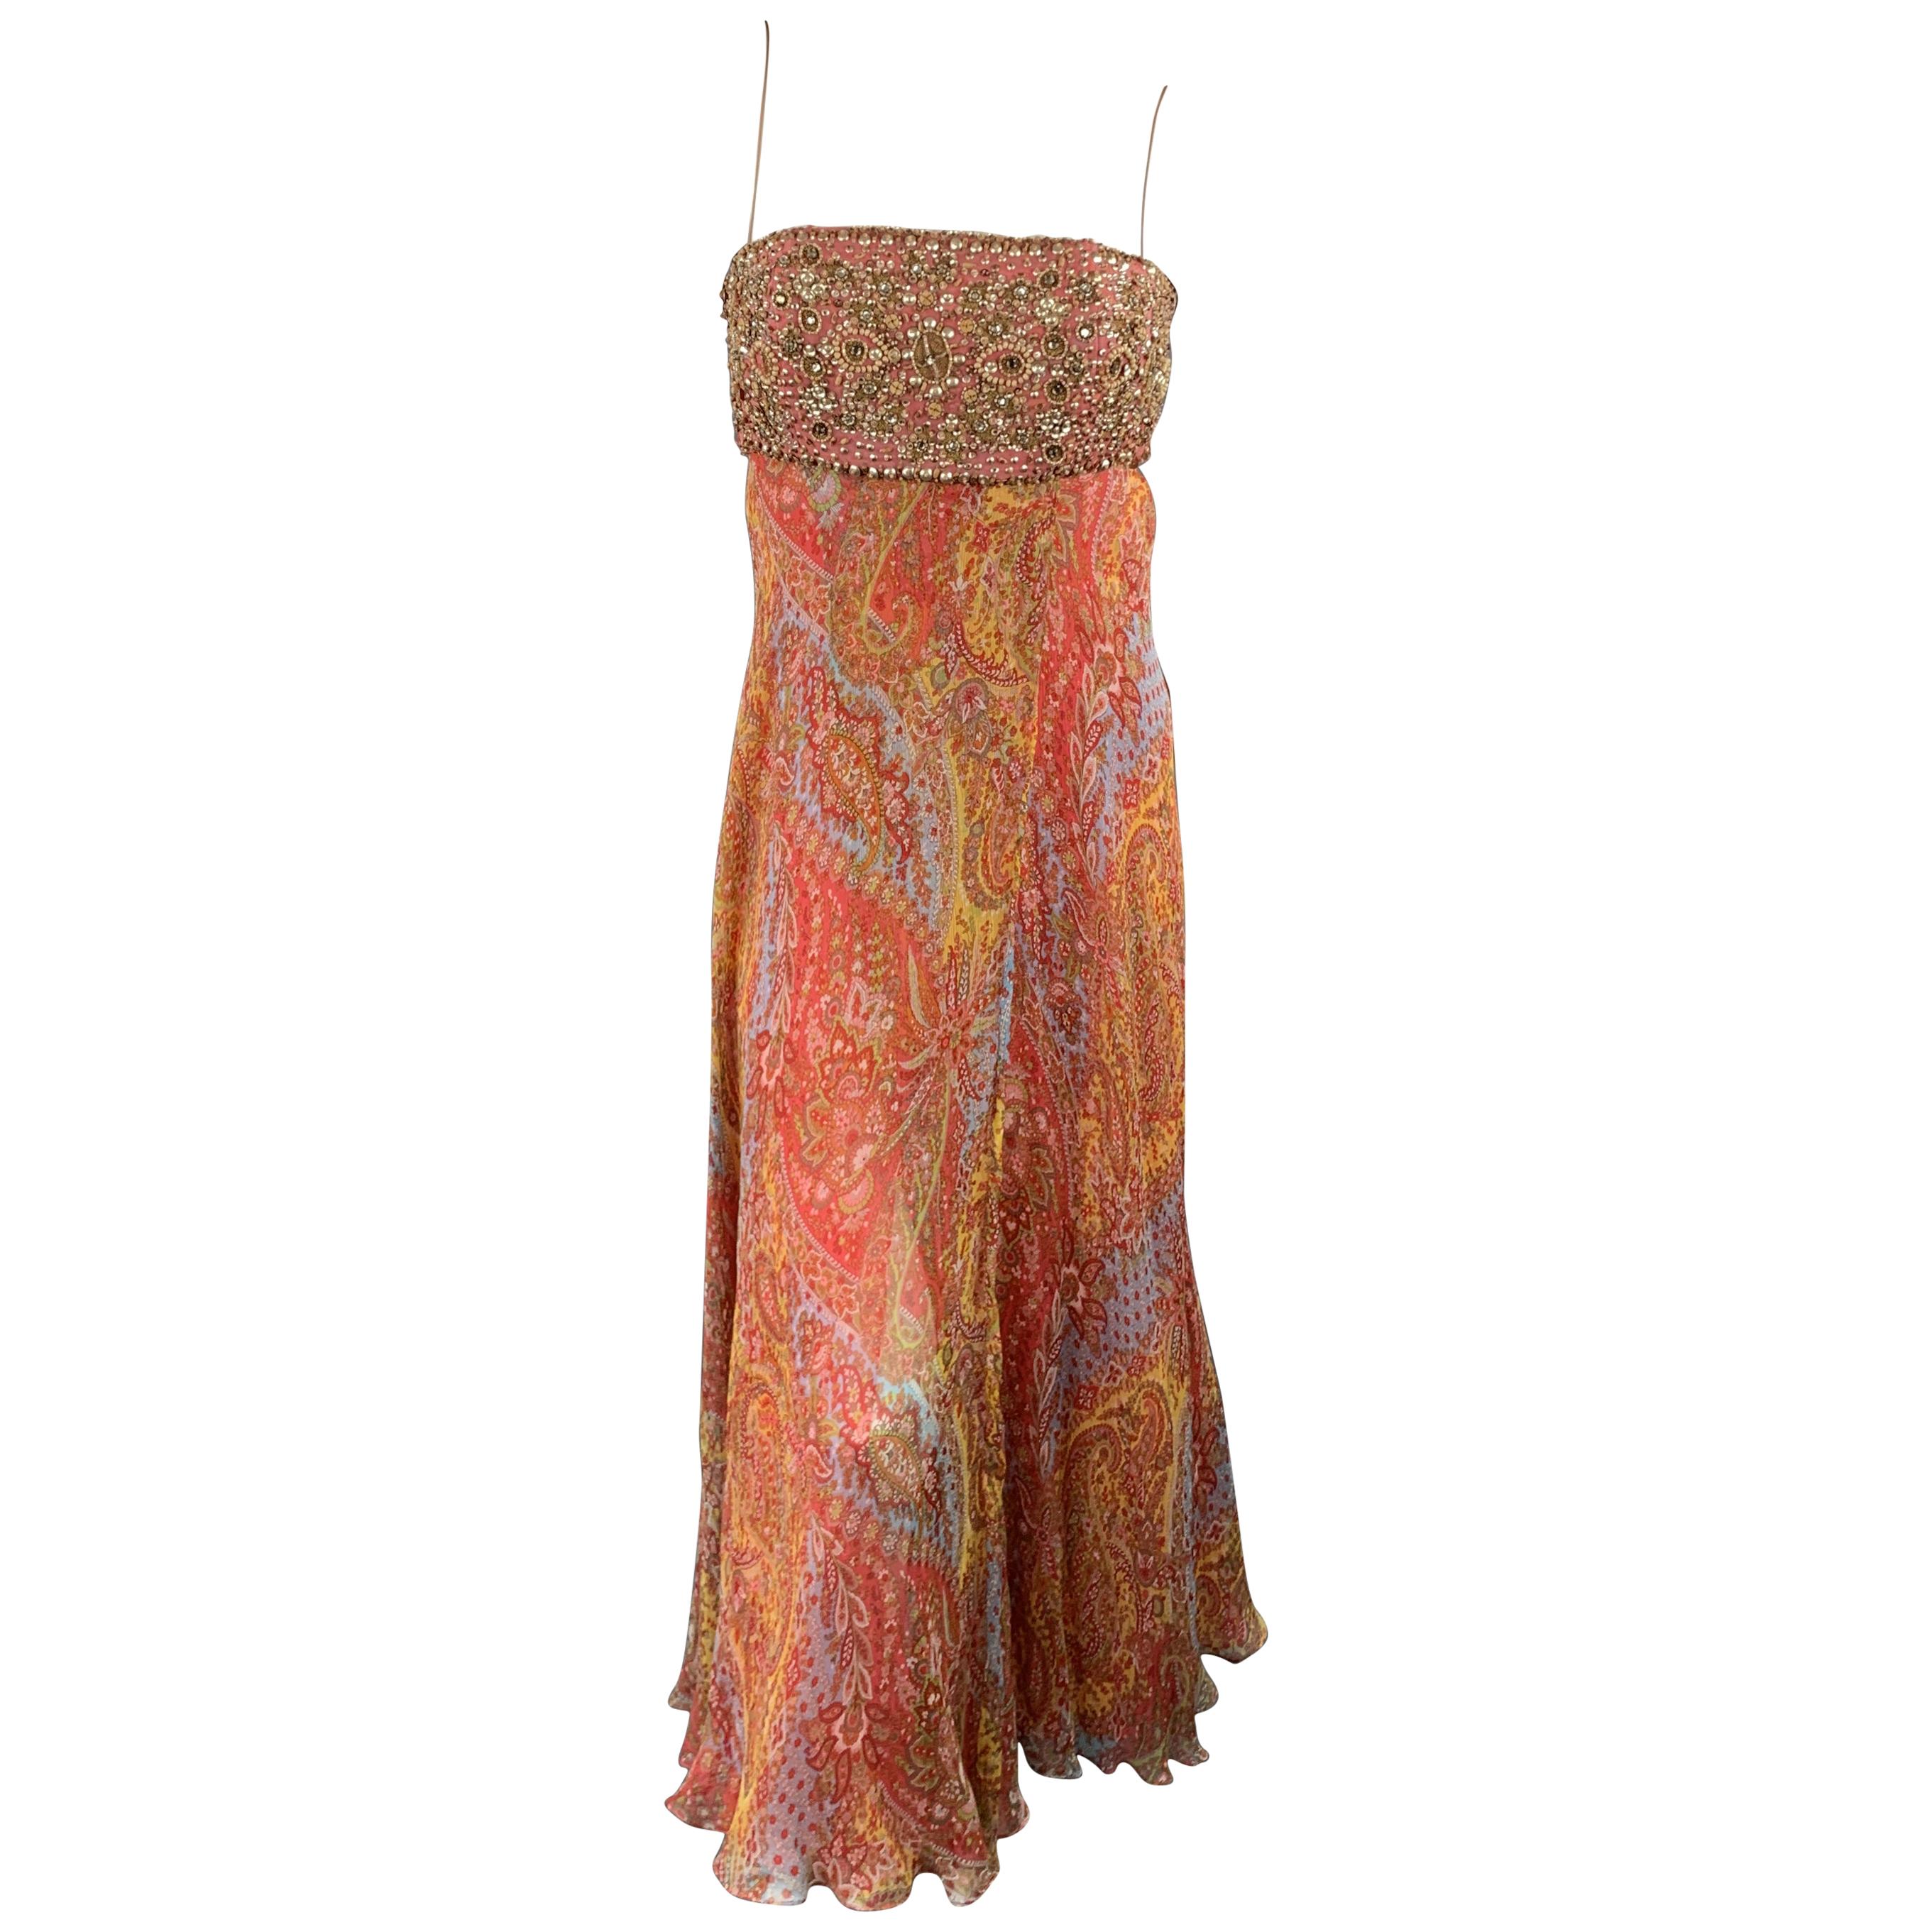 NAEEM KHAN Size 6 Multi Color Paisley Chiffon Beaded Bodice Gown